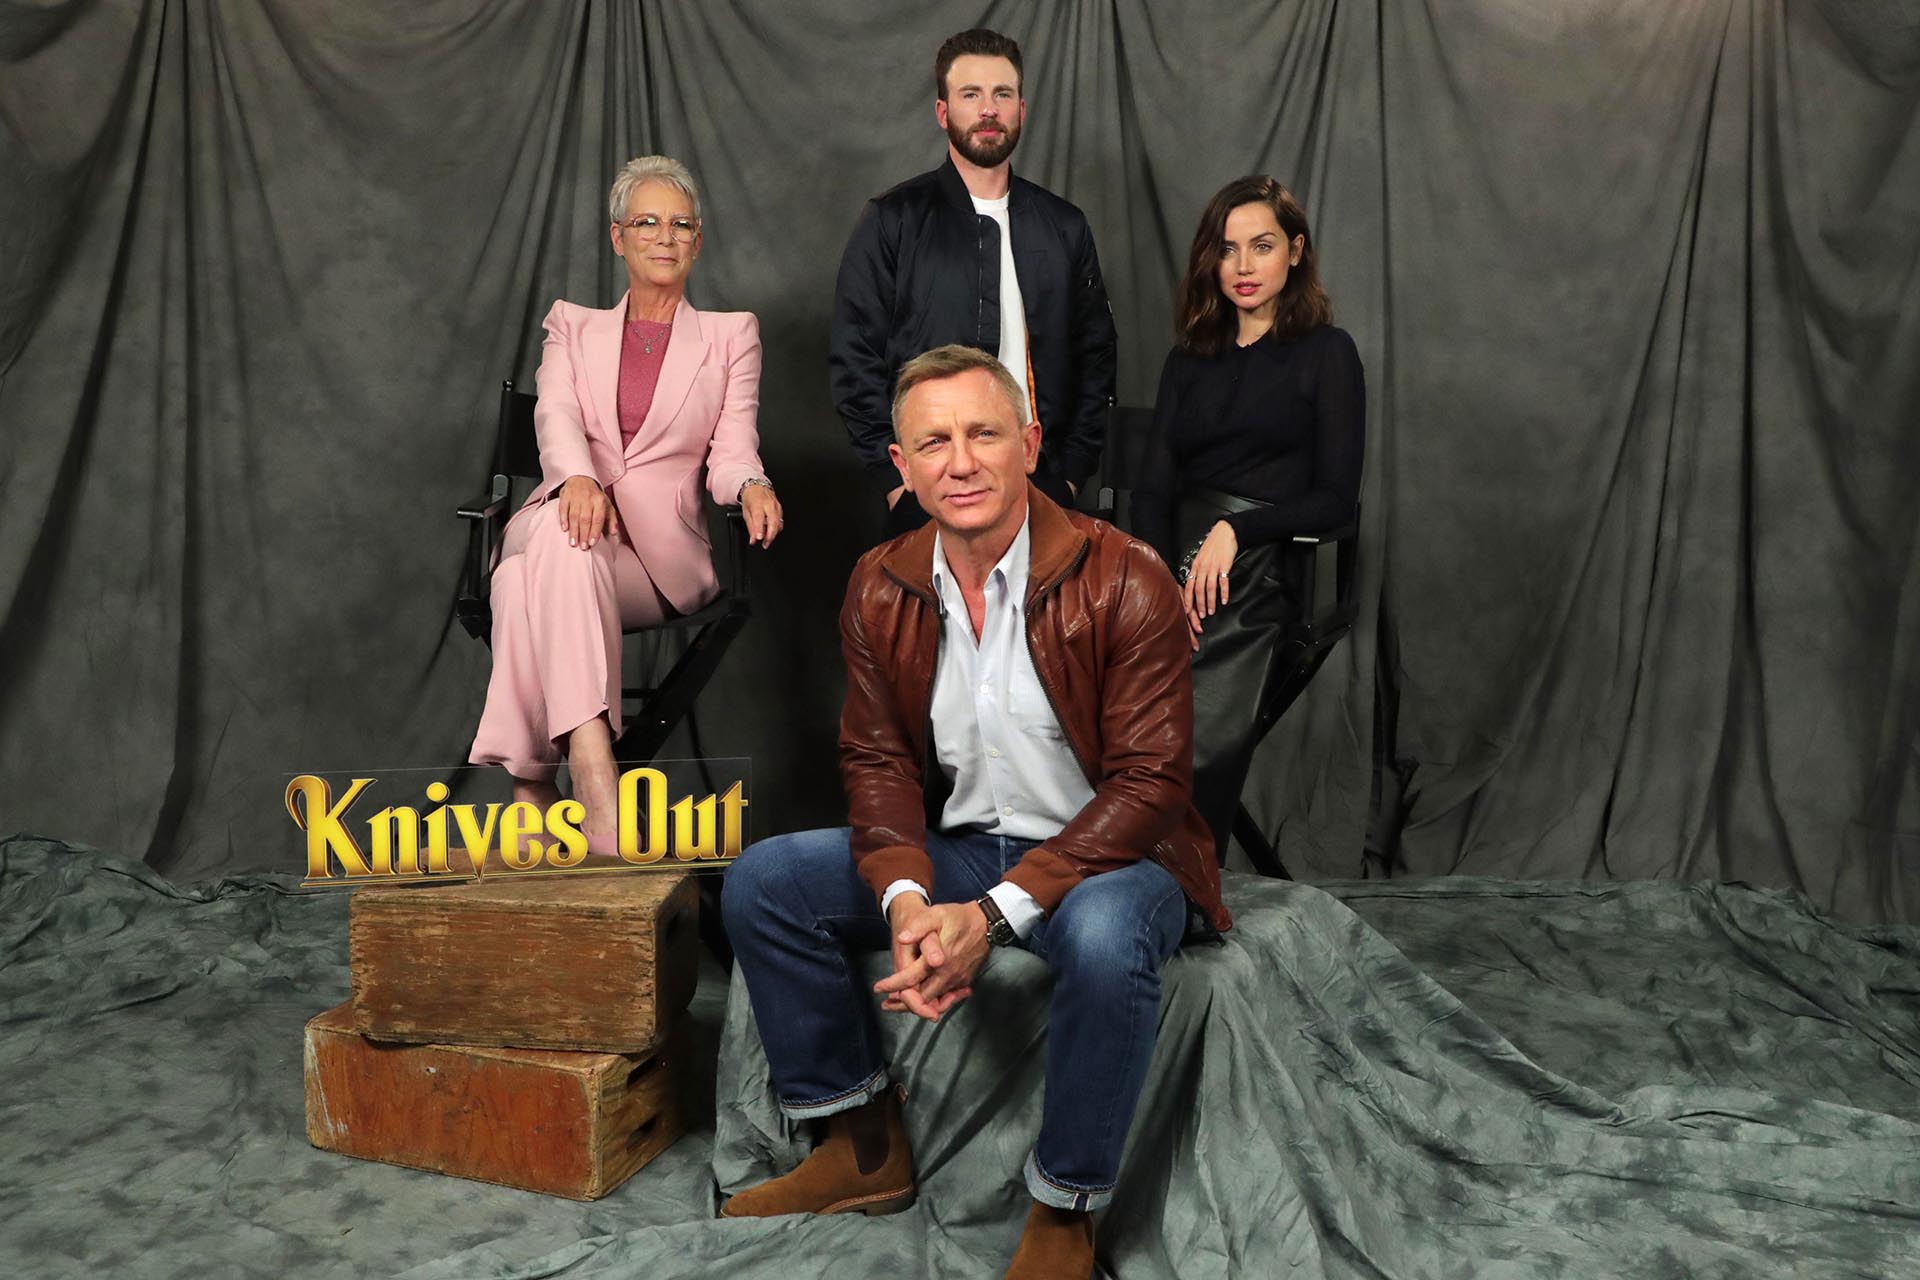 Jamie Lee Curtis, Chris Evans, Daniel Craig and Ana de Armas, stars of "Knives Out".  (Shutterstock)